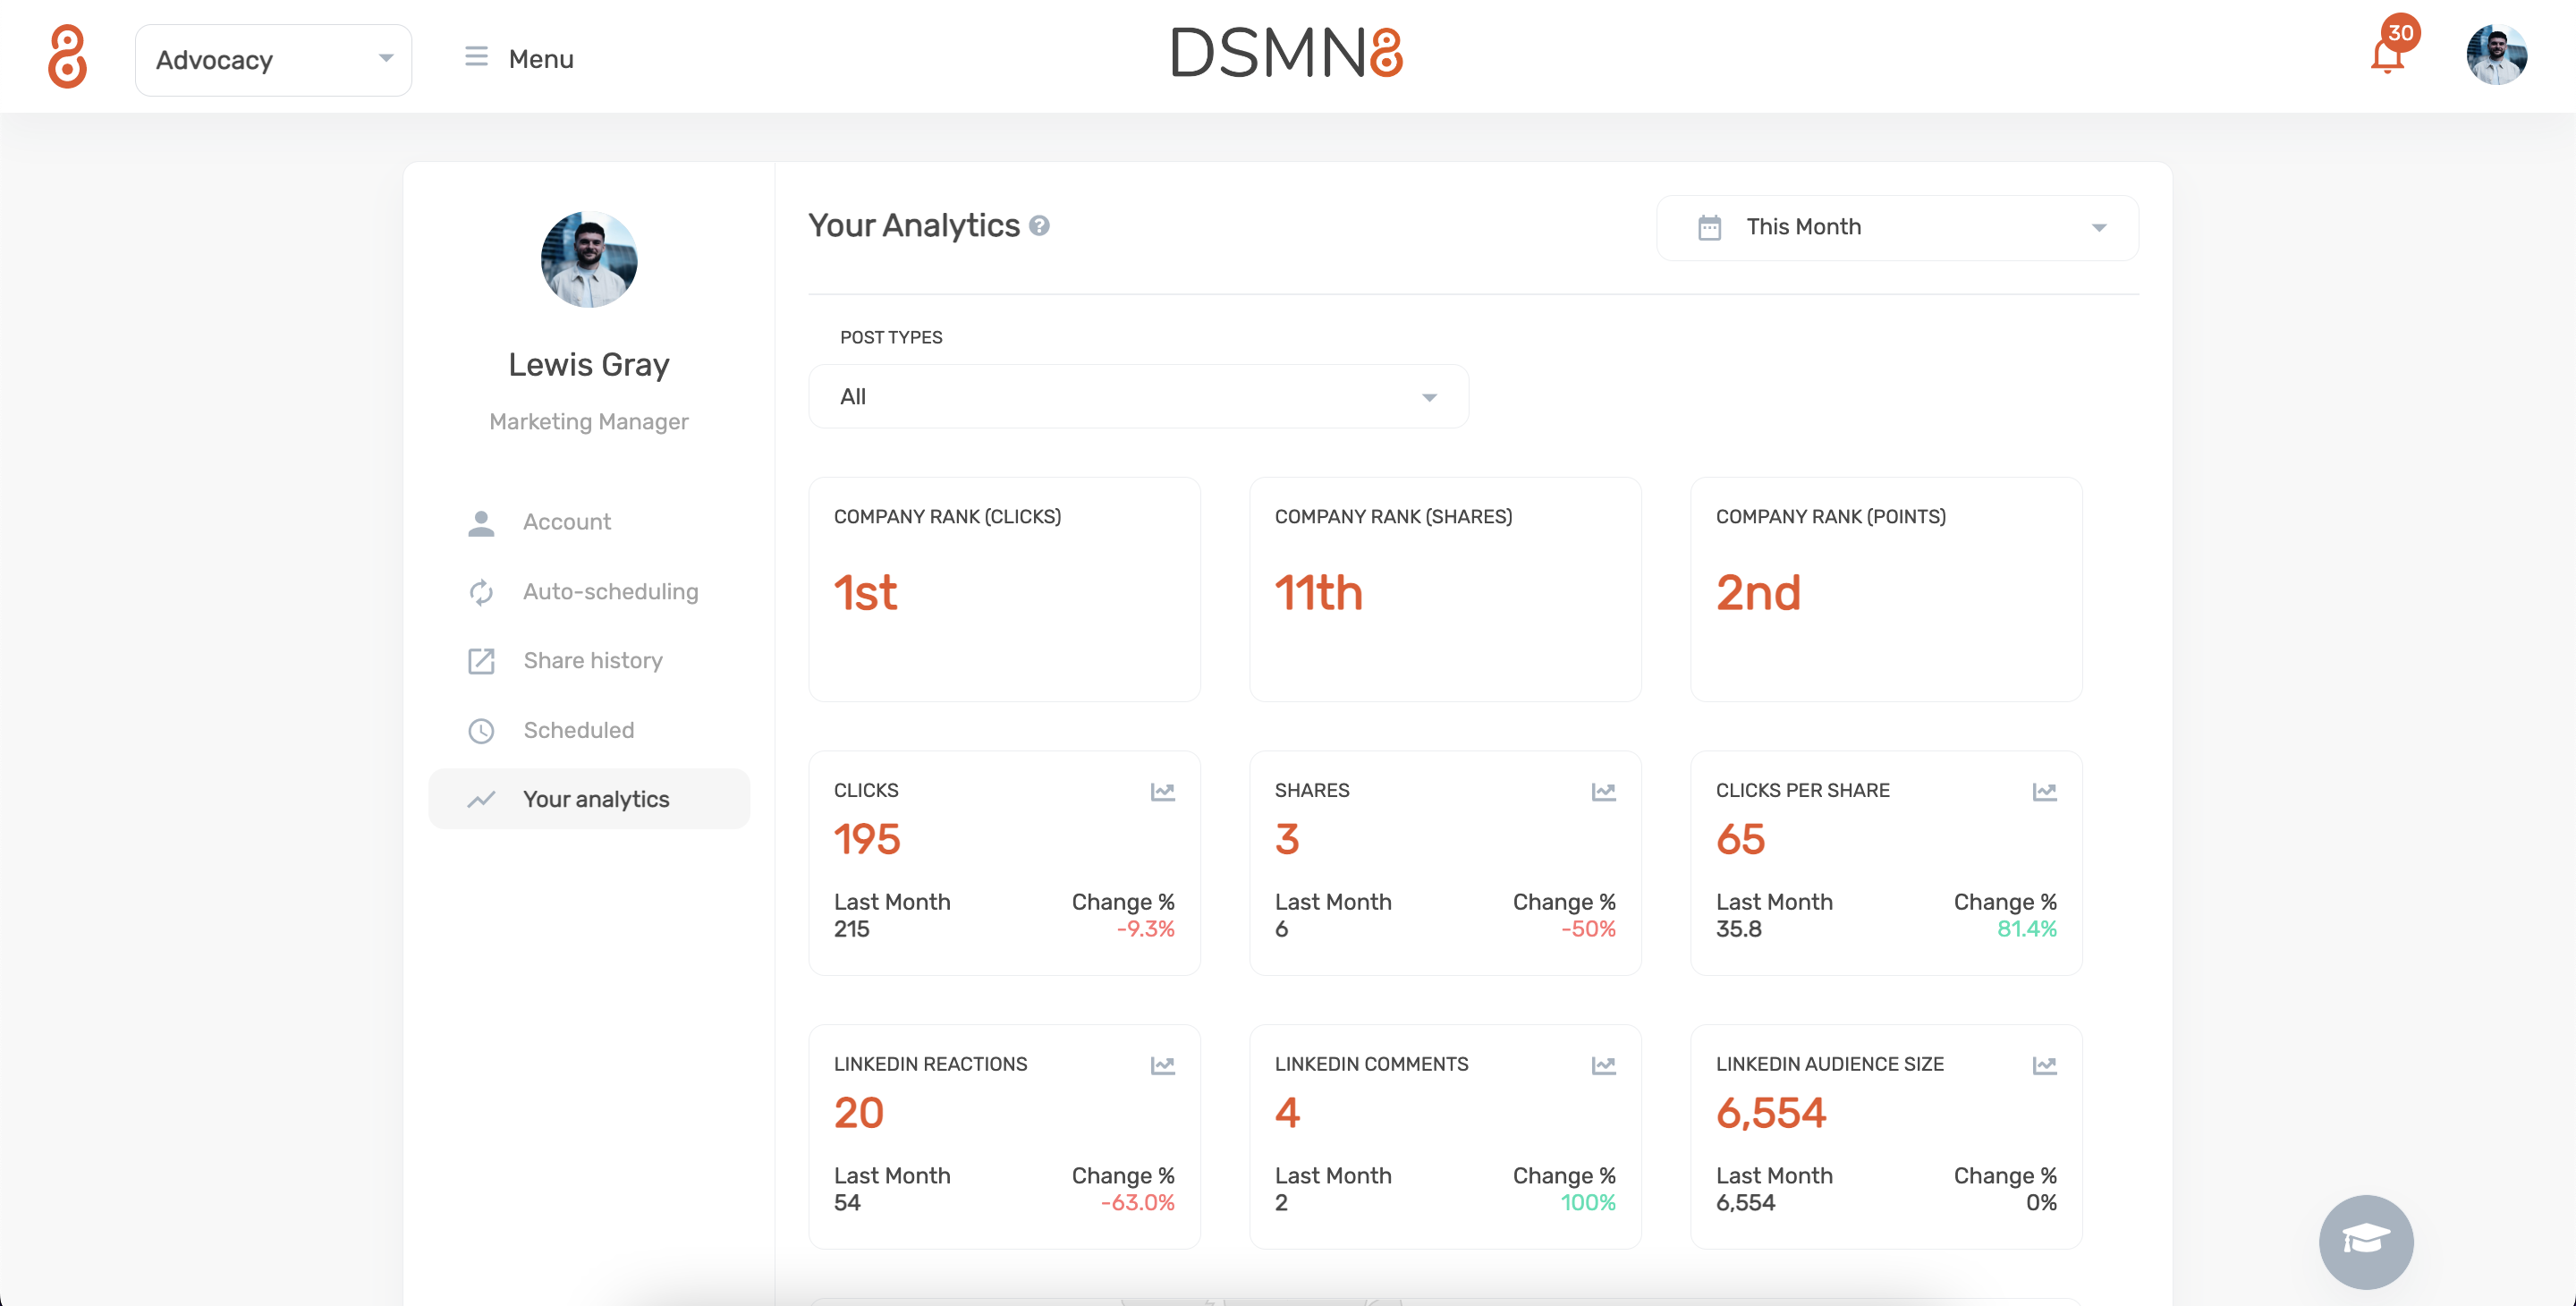 DSMN8 Personal Analytics